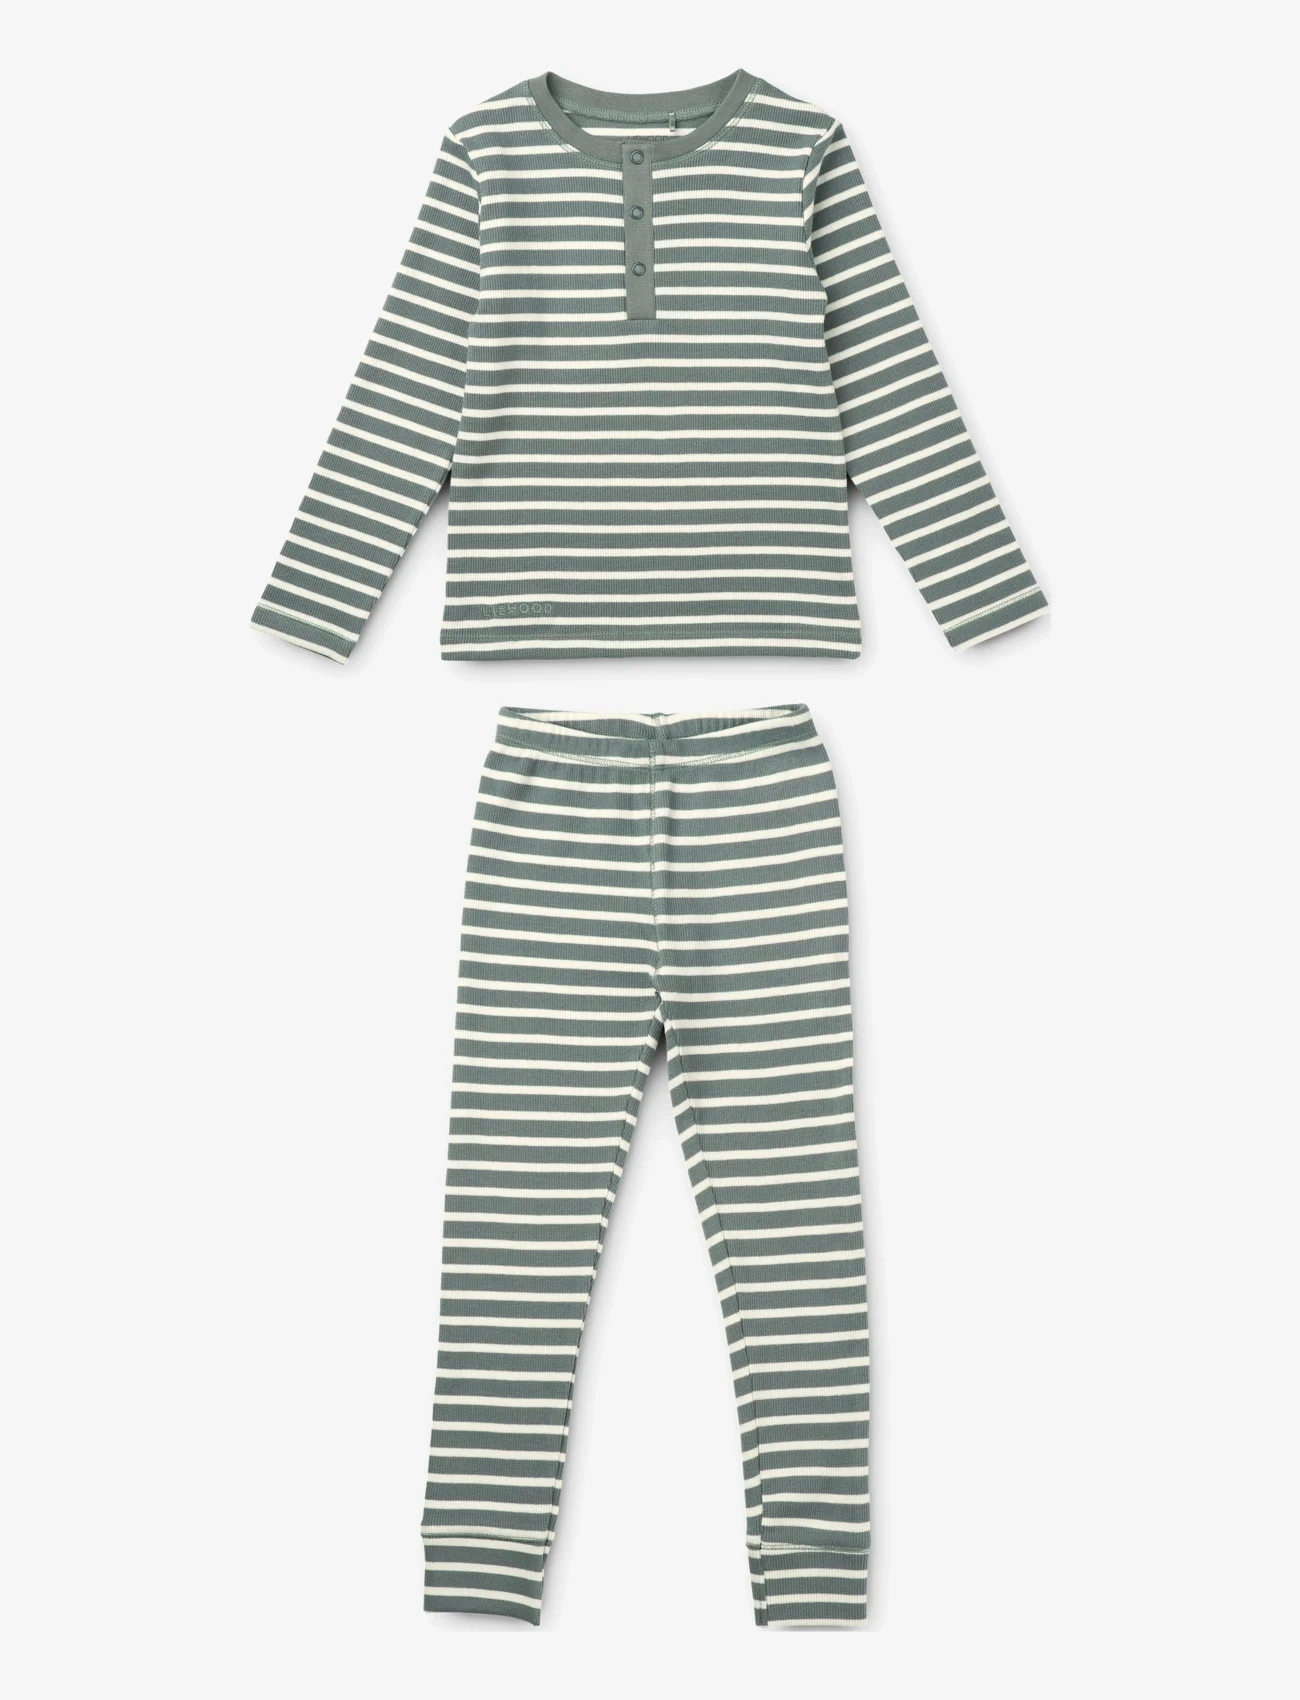 Liewood - Wilhelm pyjamas set - sett - y/d stripe - 0